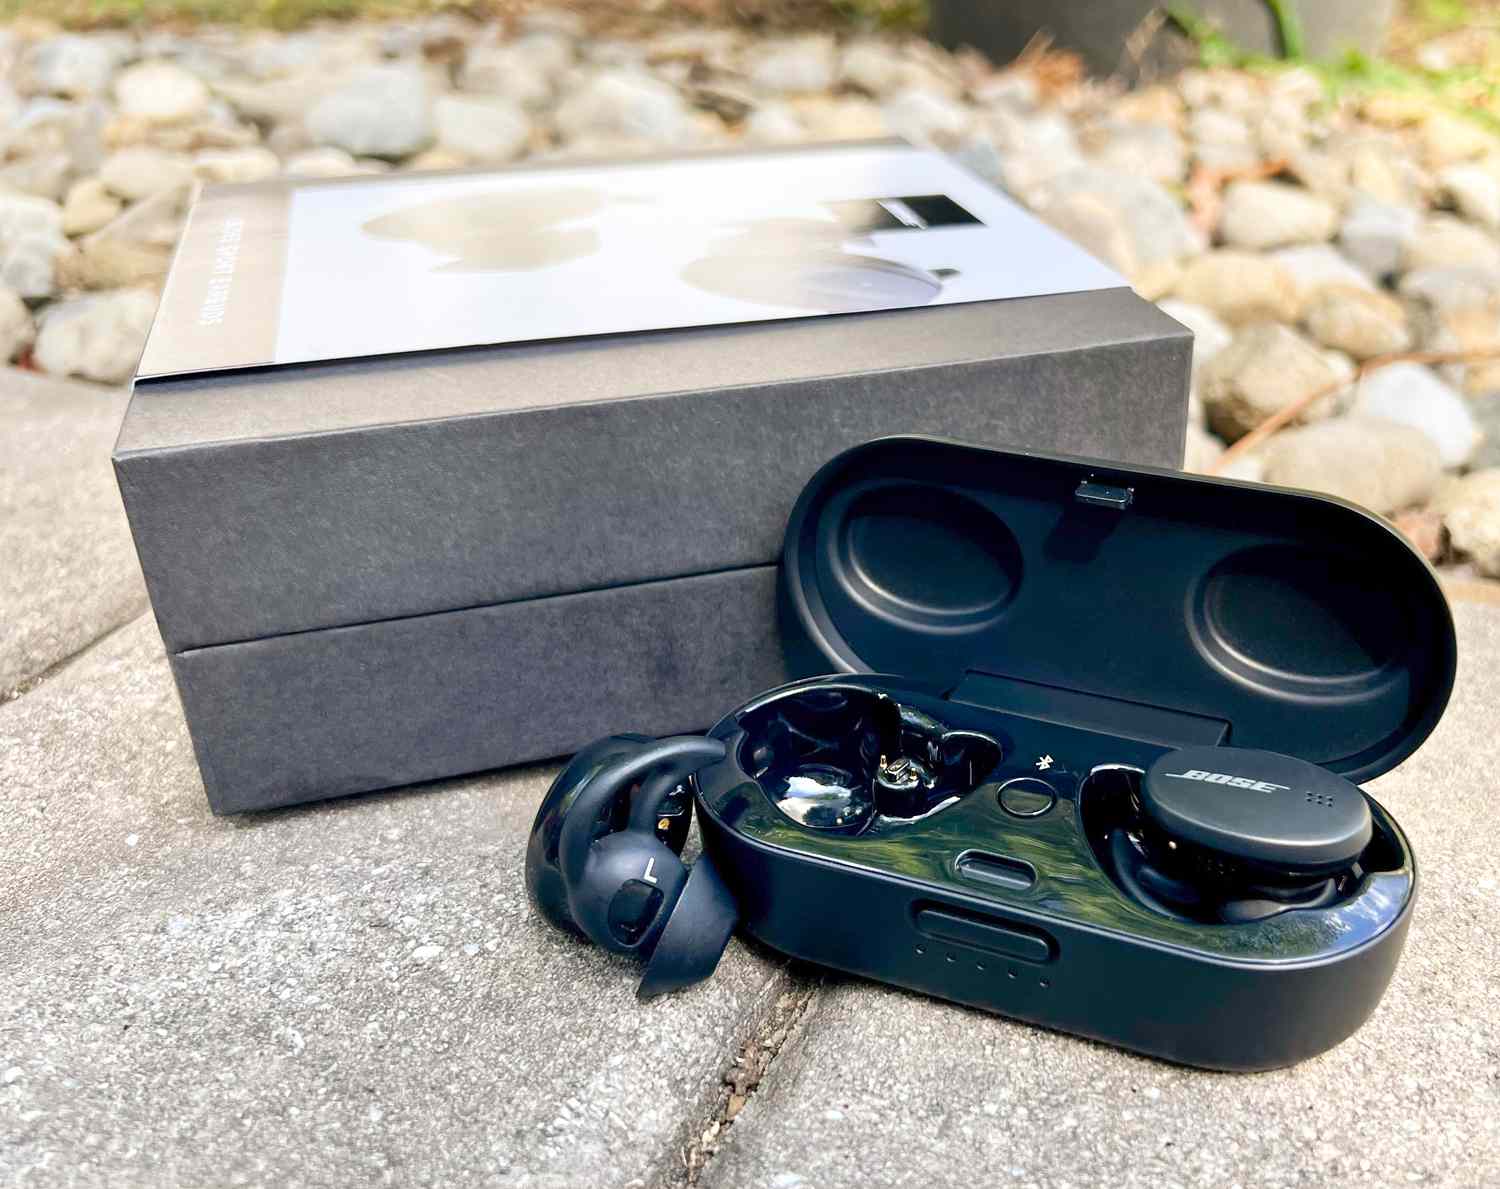 Bose Sport Earbuds Review: ontworpen met hardlopers in gedachten